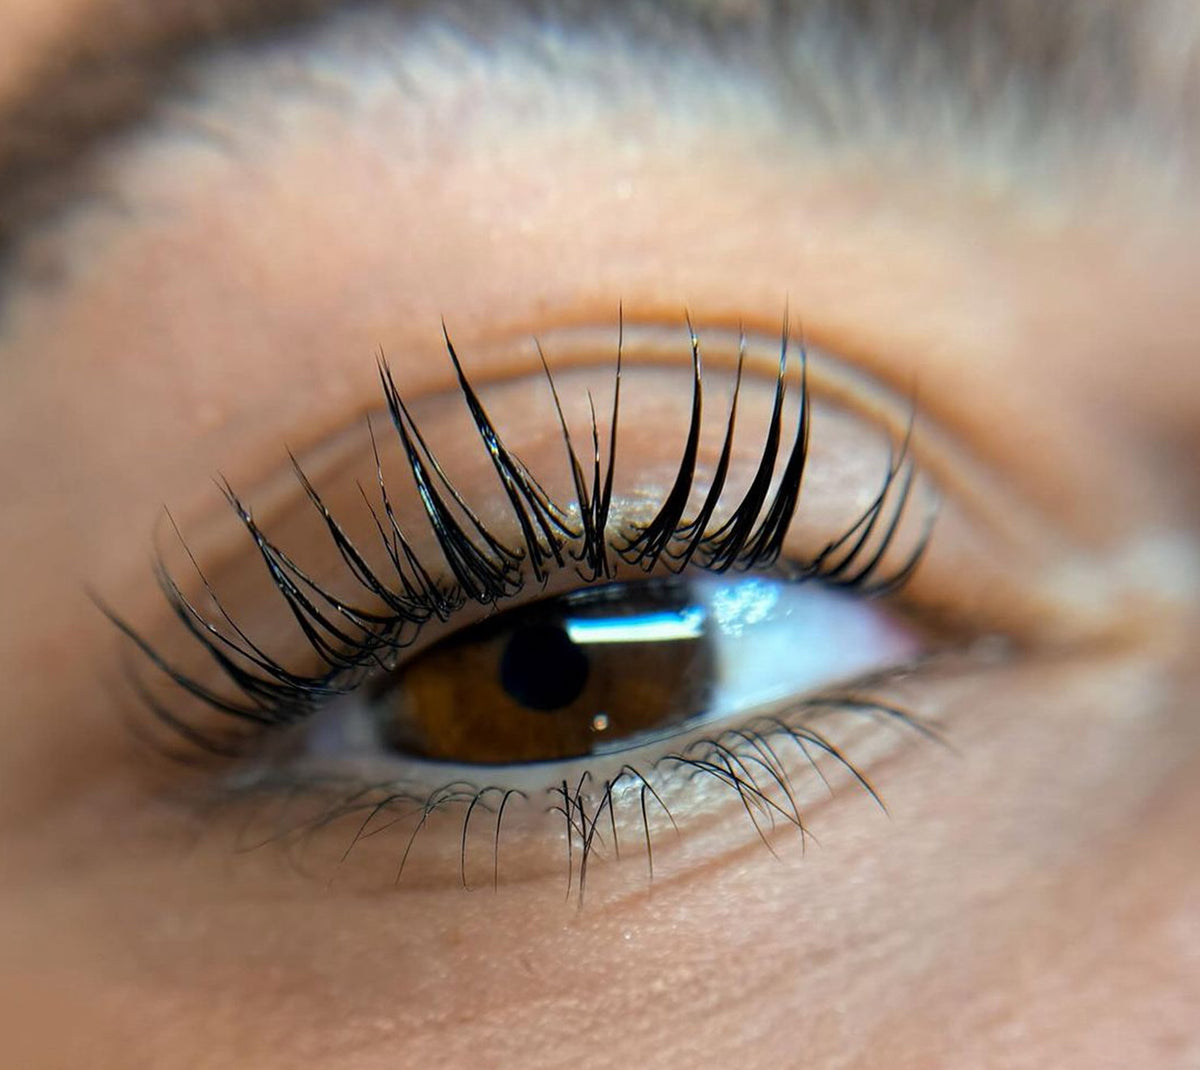 Eyelash treatment results at Nuage Beaty House's non-toxic lash bar